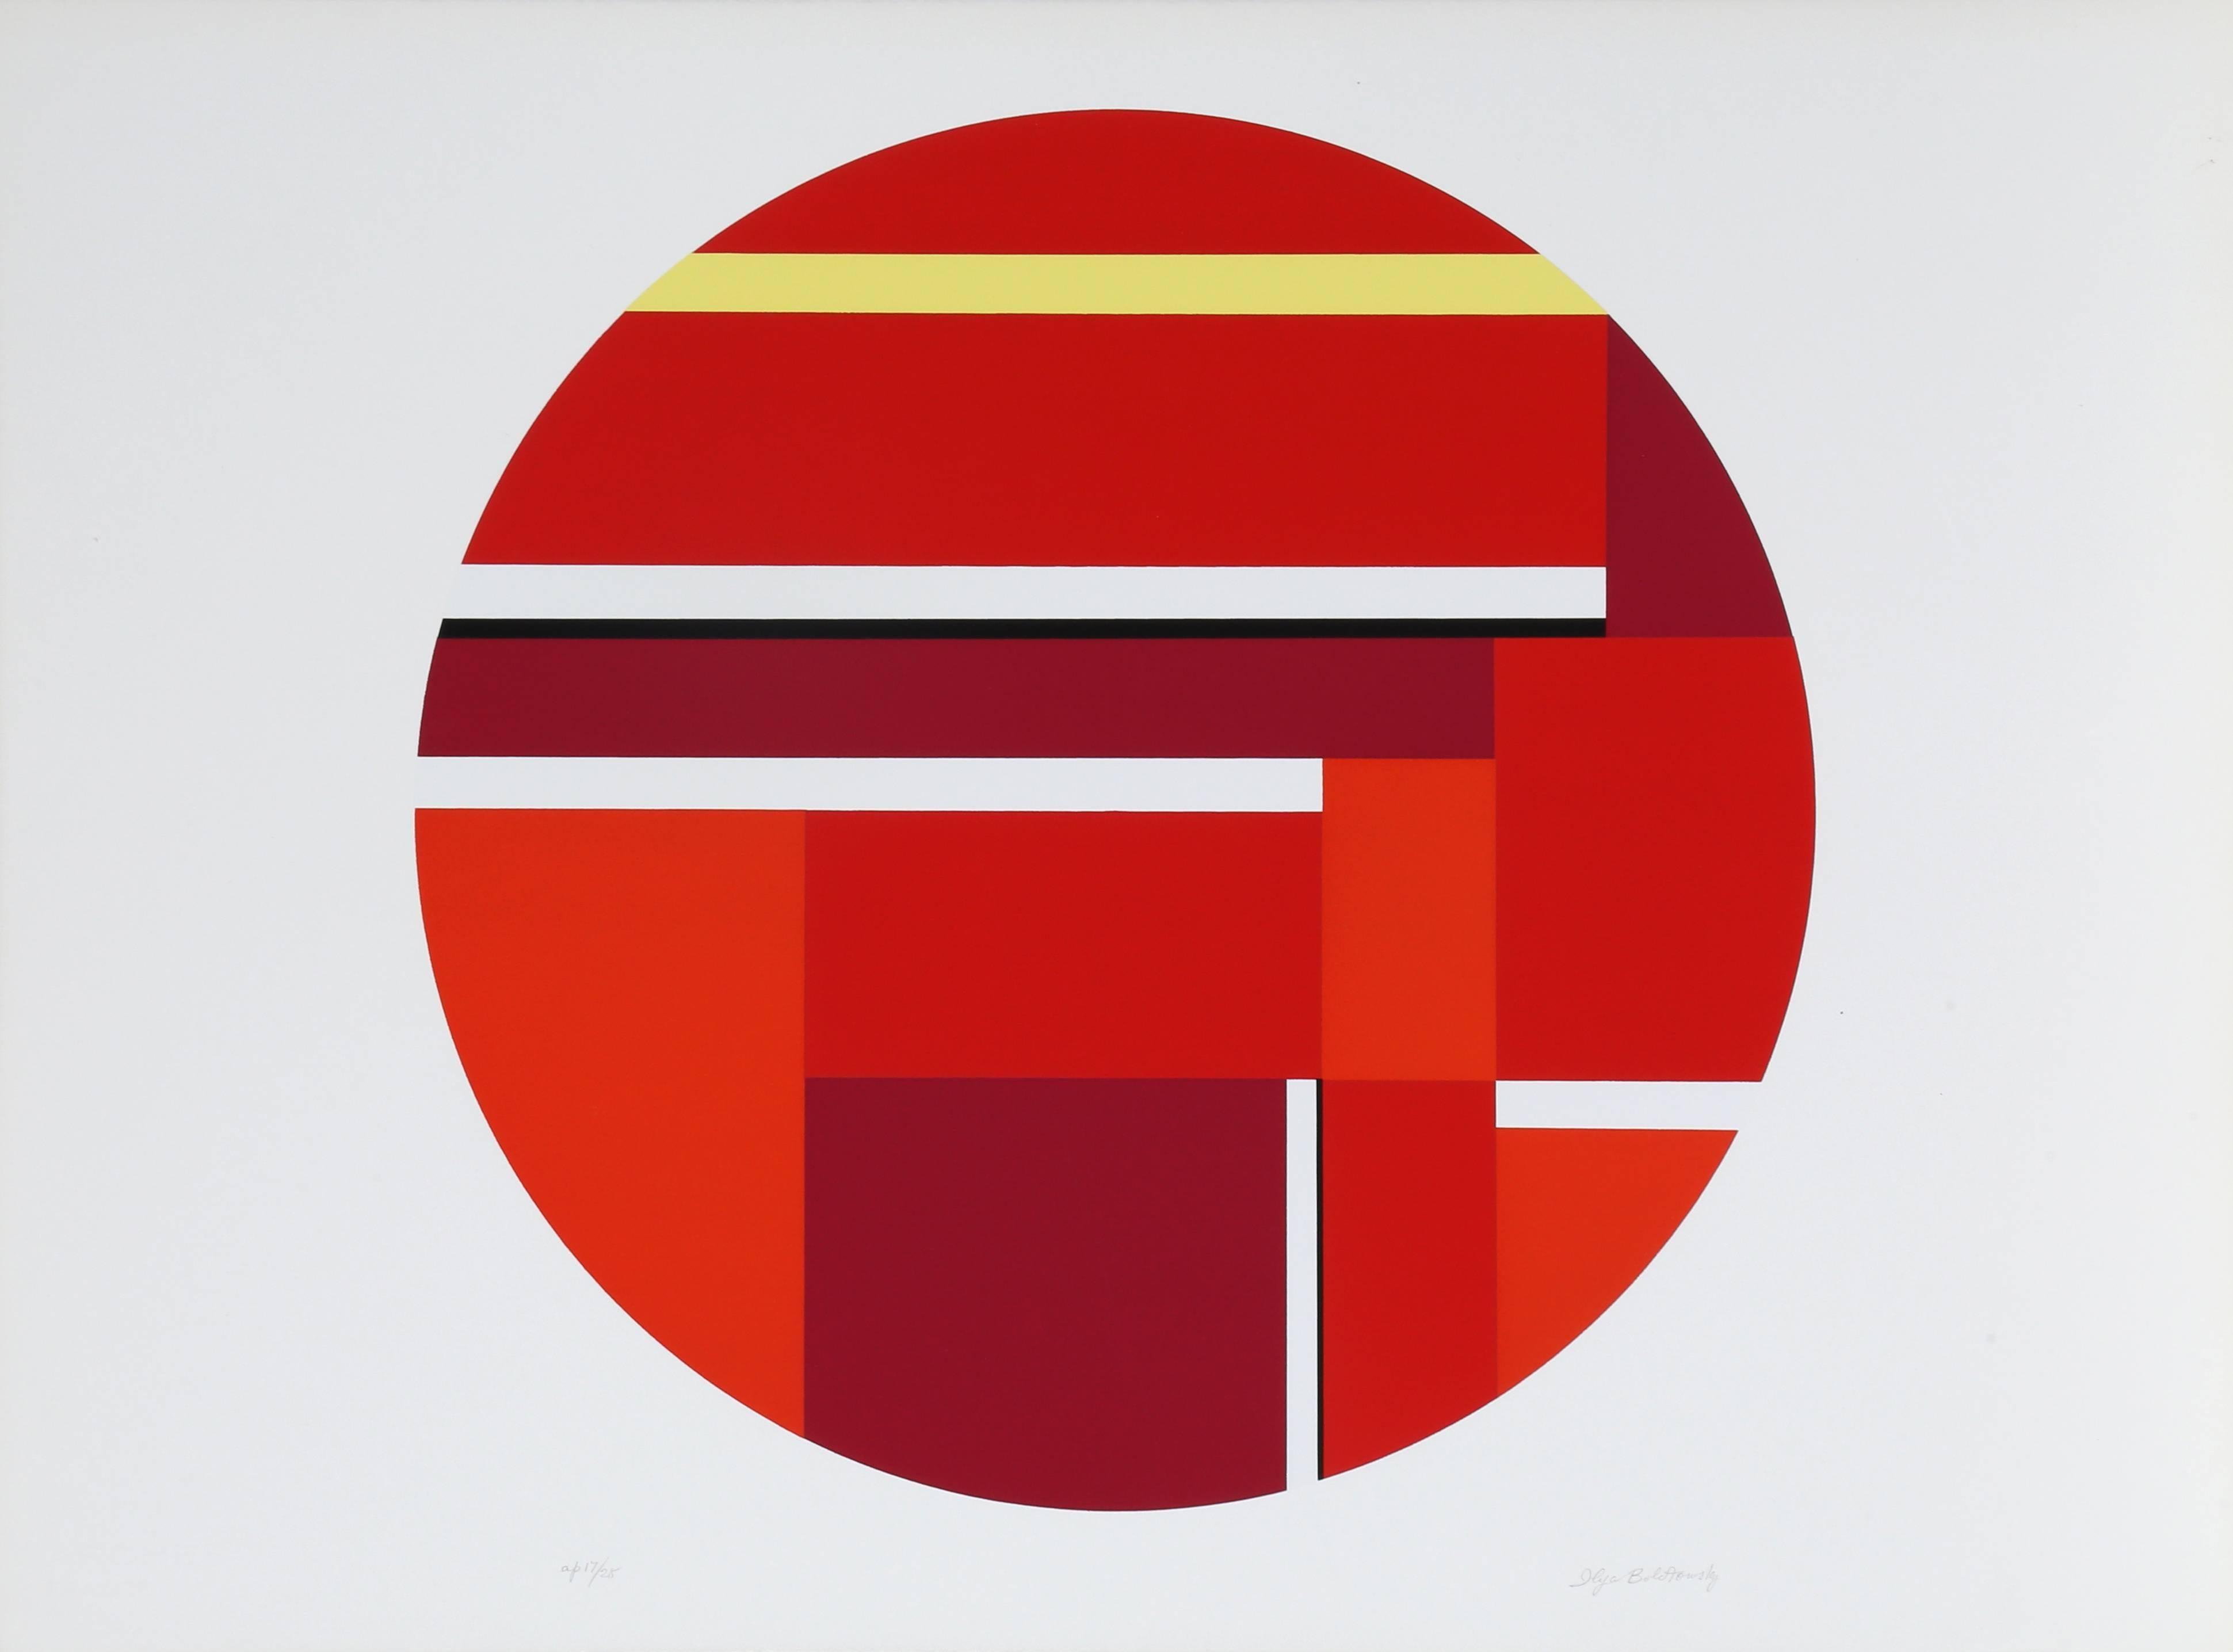 Red Tondo, Geometric Abstract Screenprint by Ilya Bolotowsky